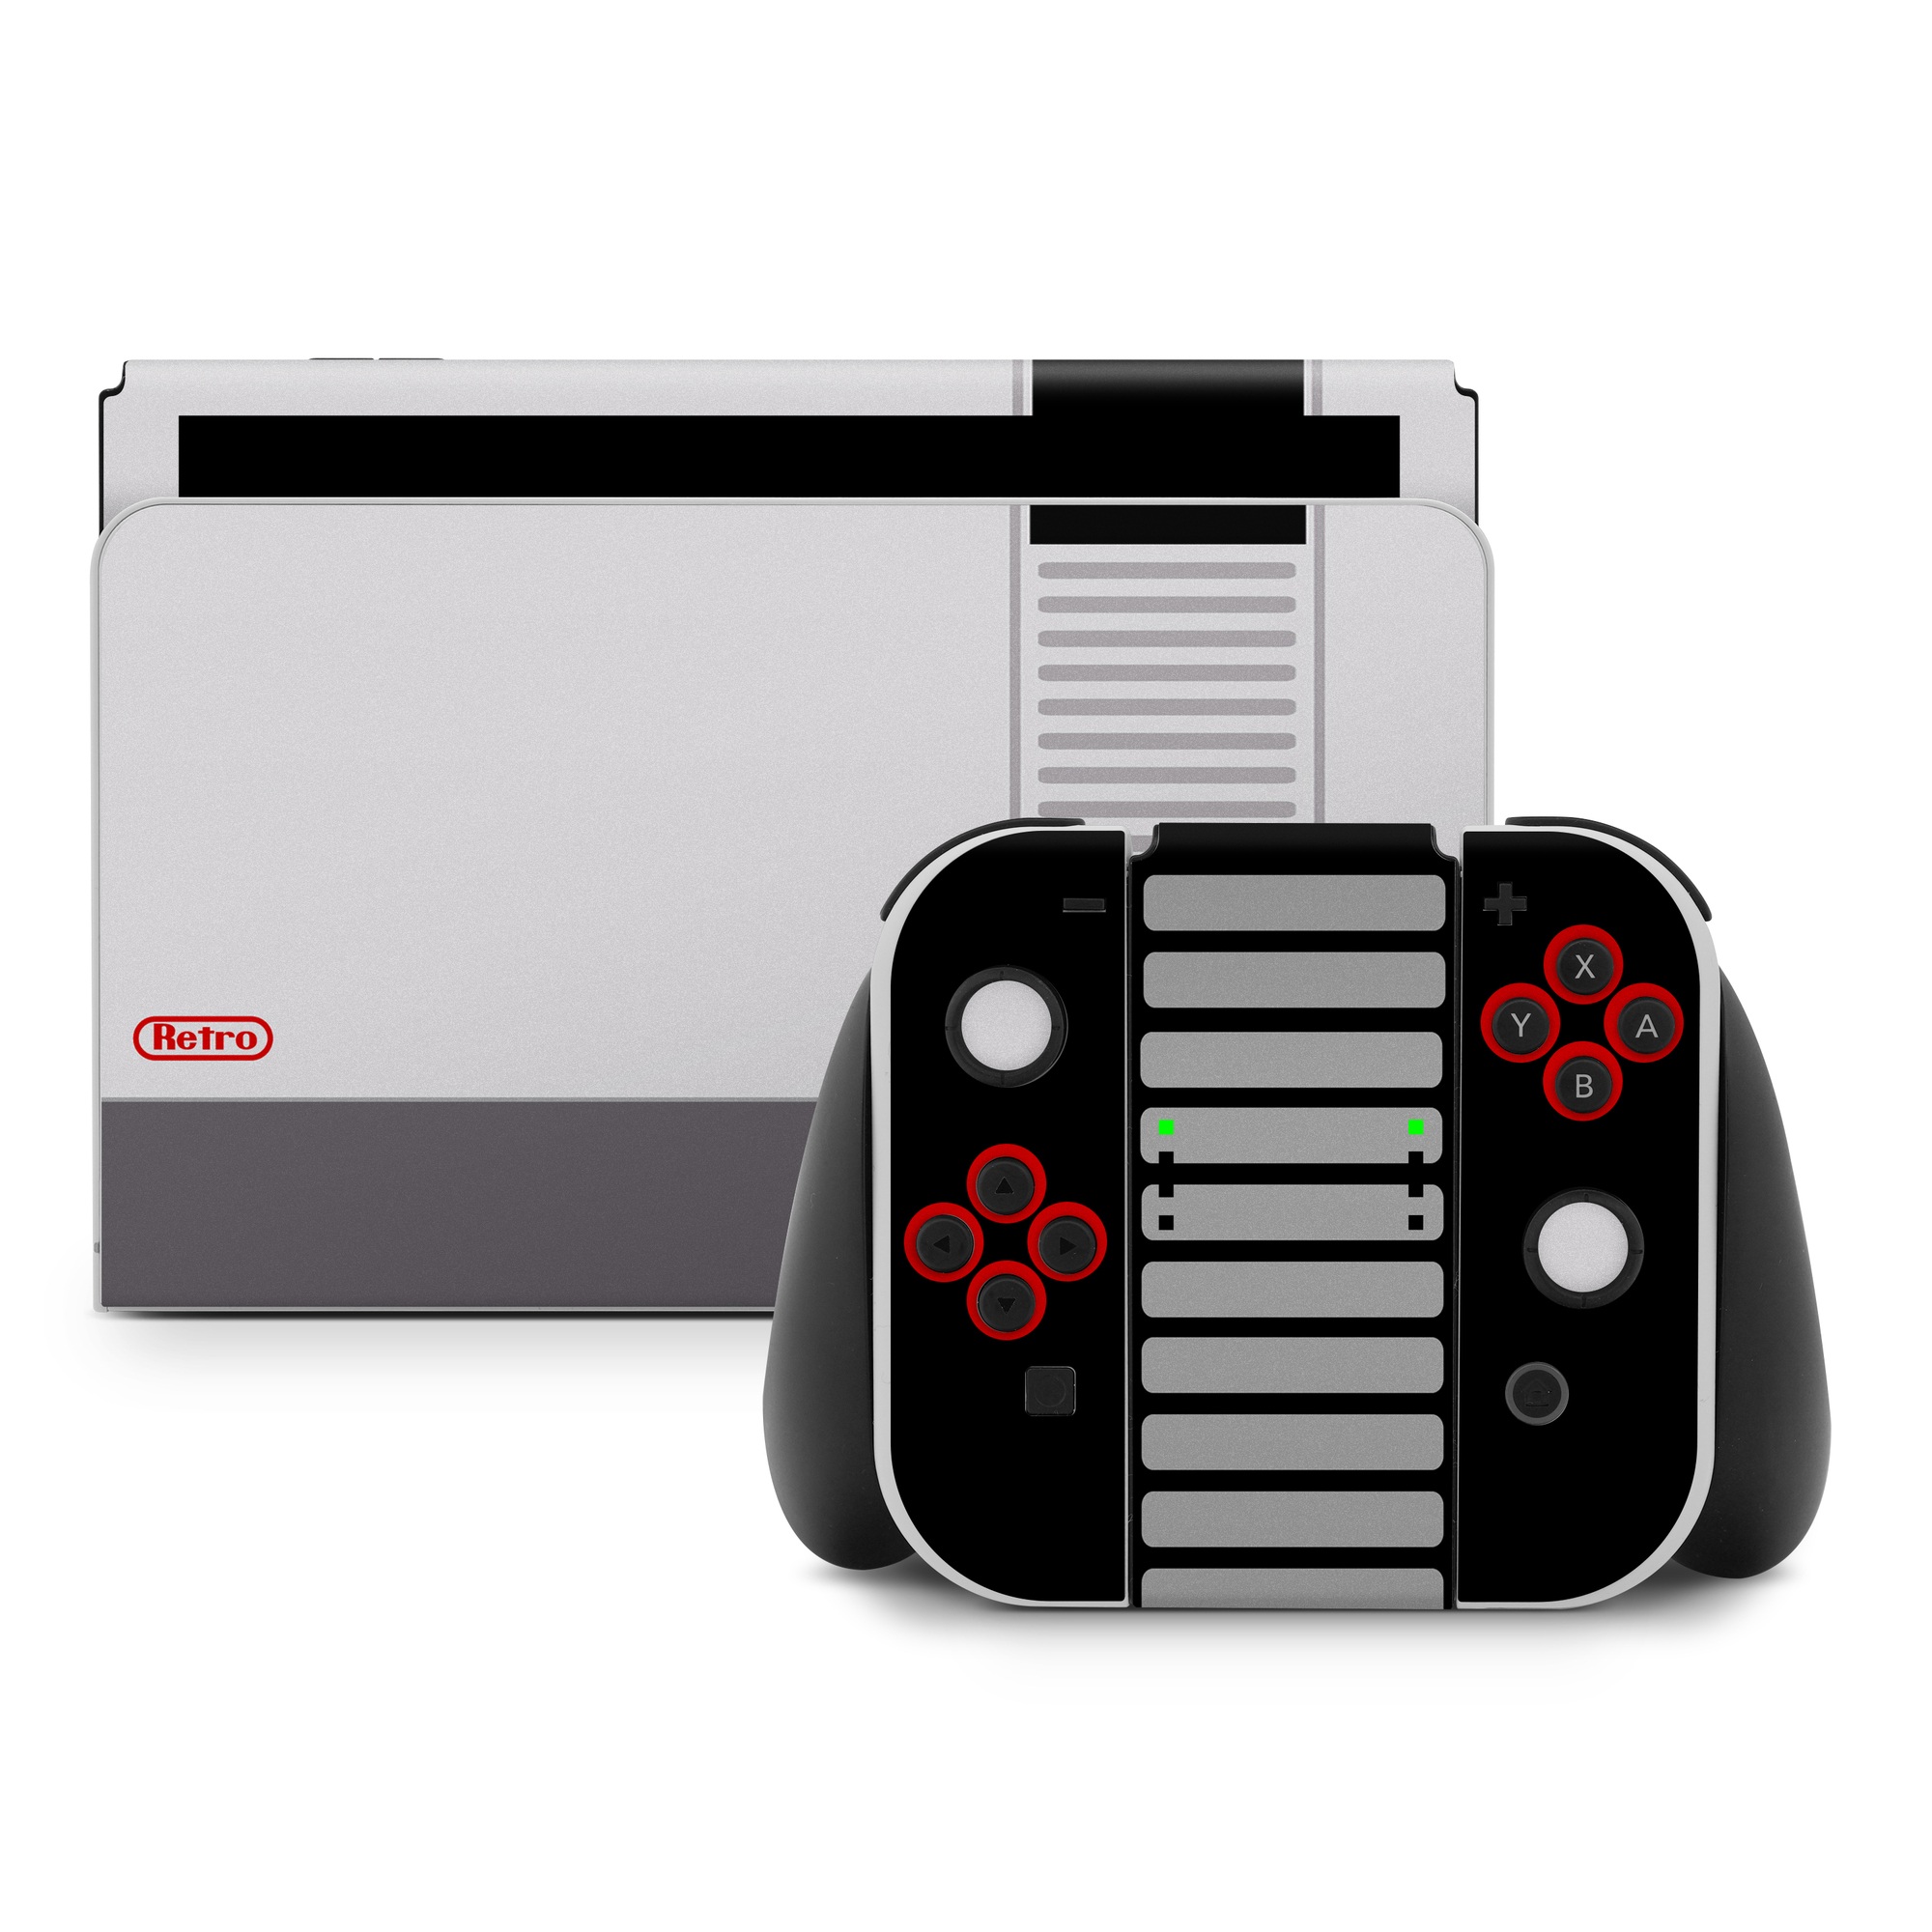 Nintendo Switch Skin - Retro (Image 1)